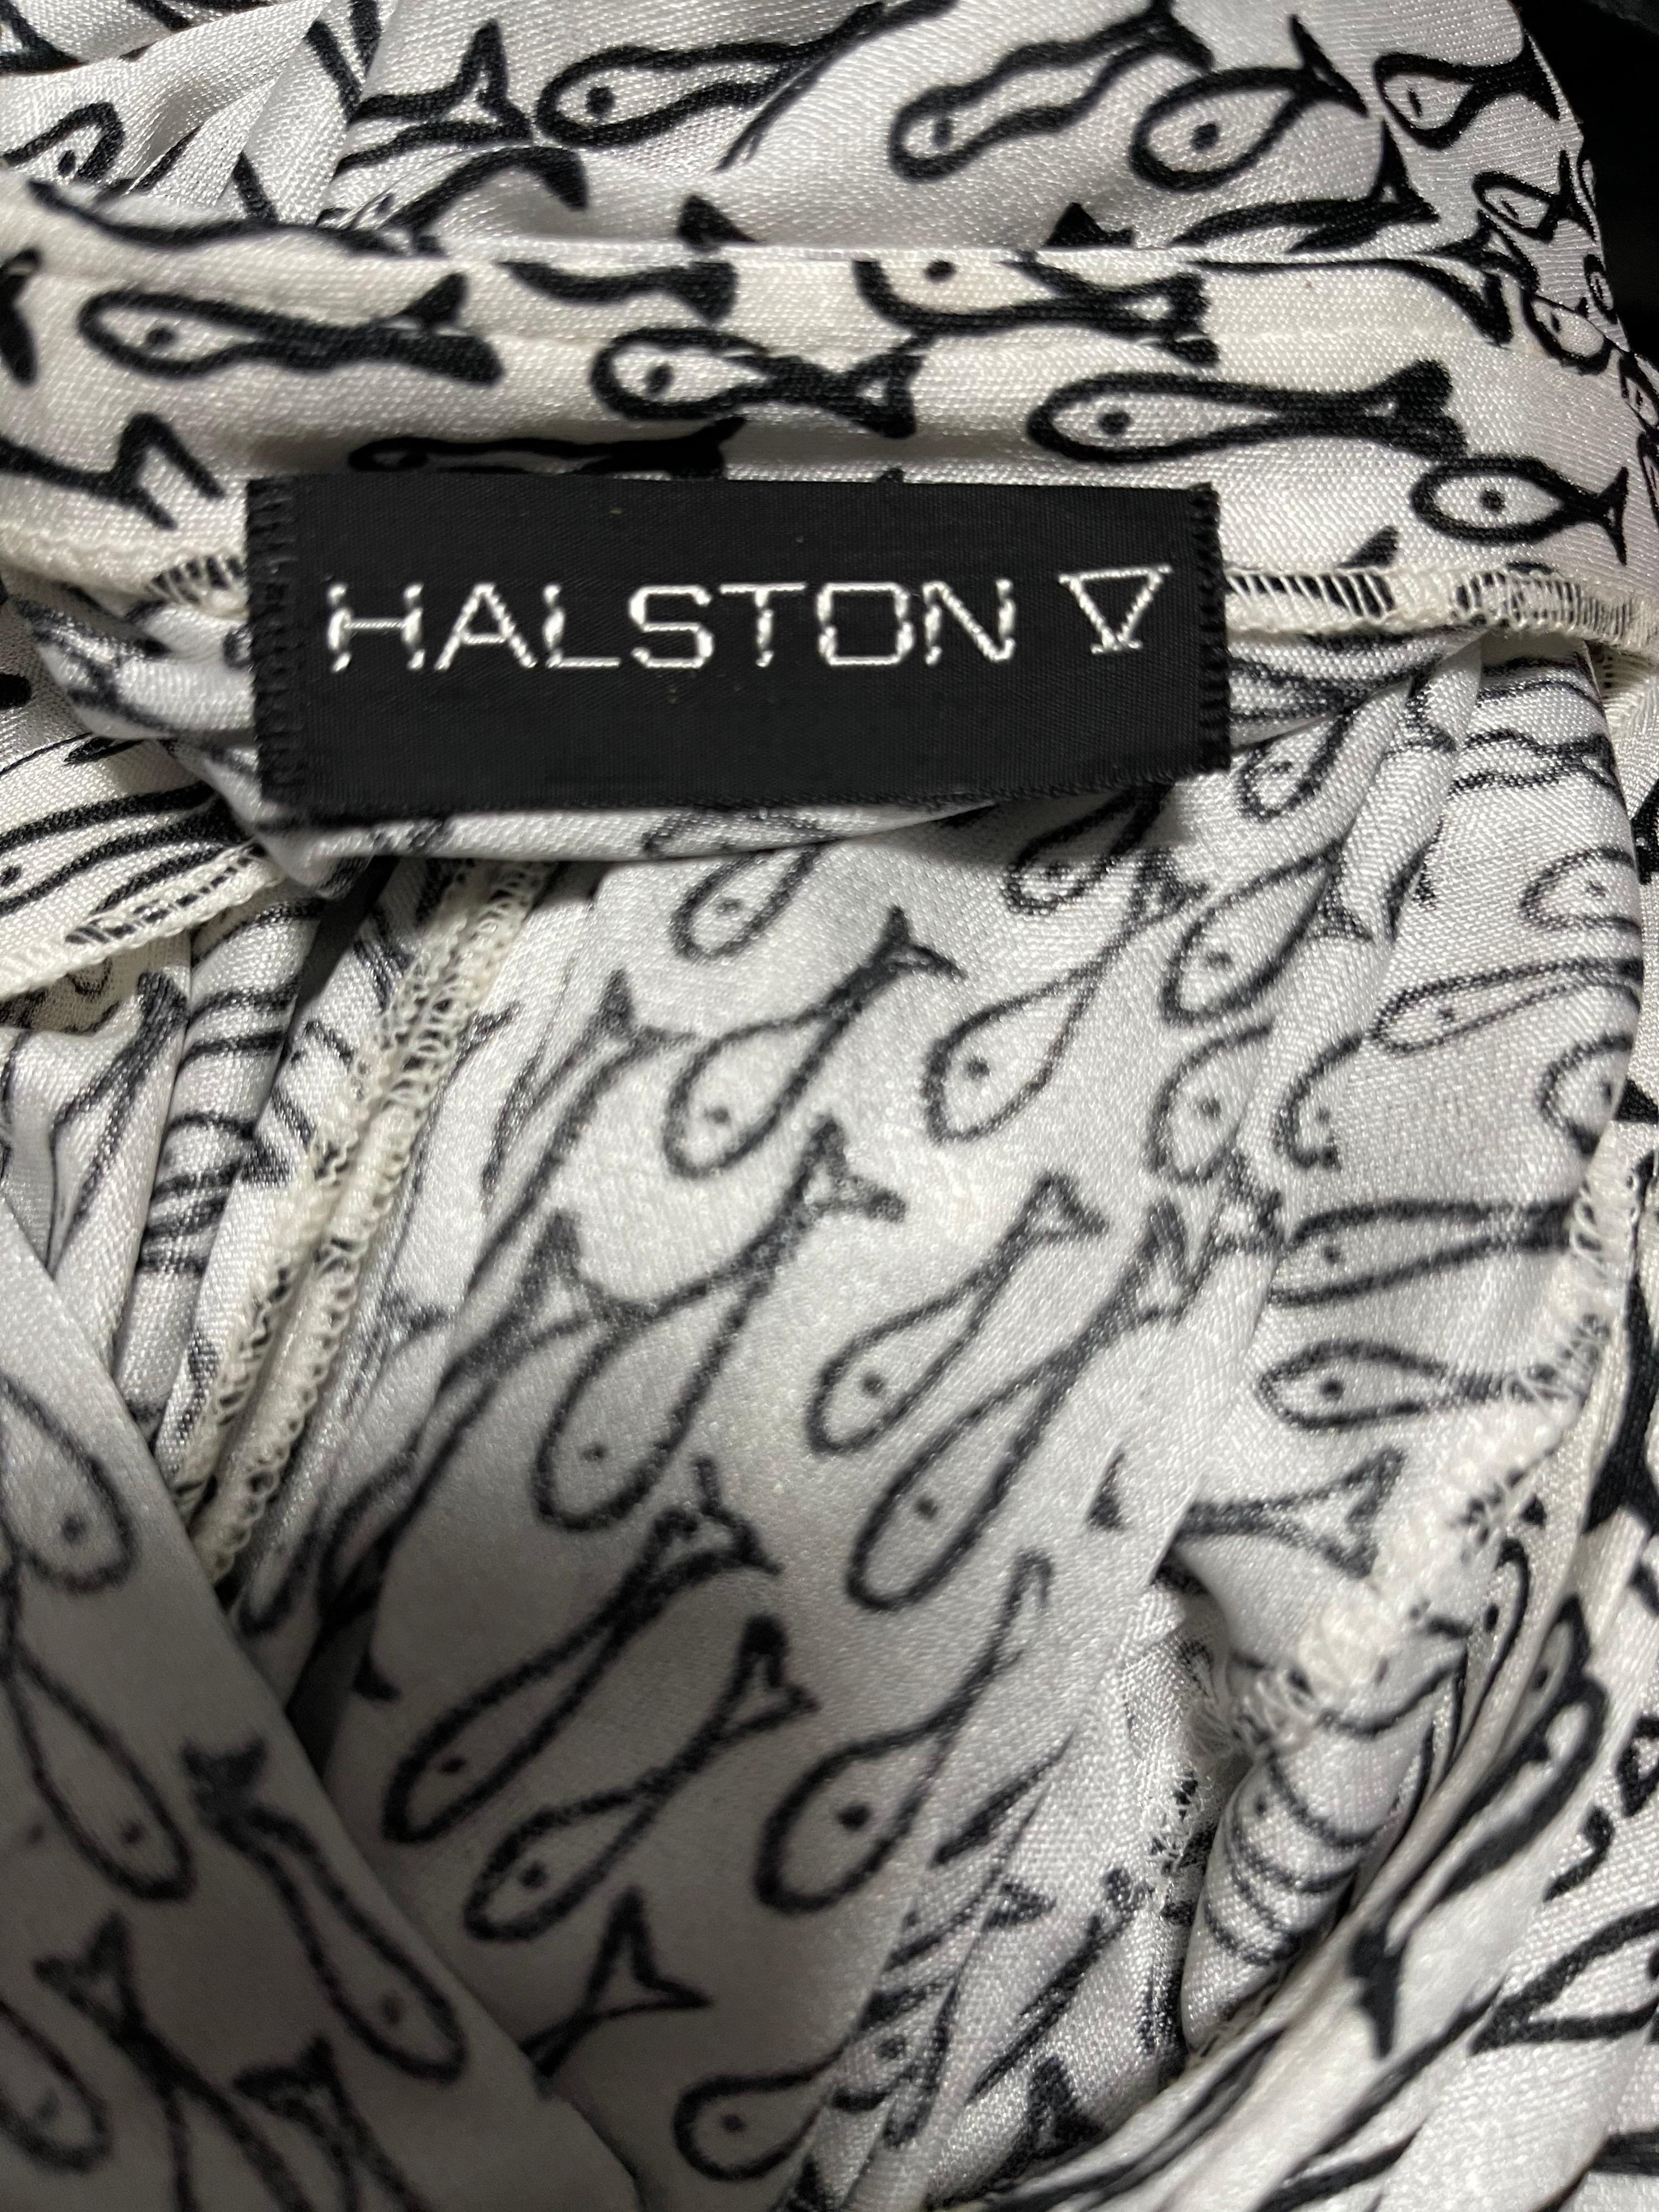 Halston IV 1970s Rare Novelty Fish Print Black and White Vintage 70s Ensemble For Sale 13